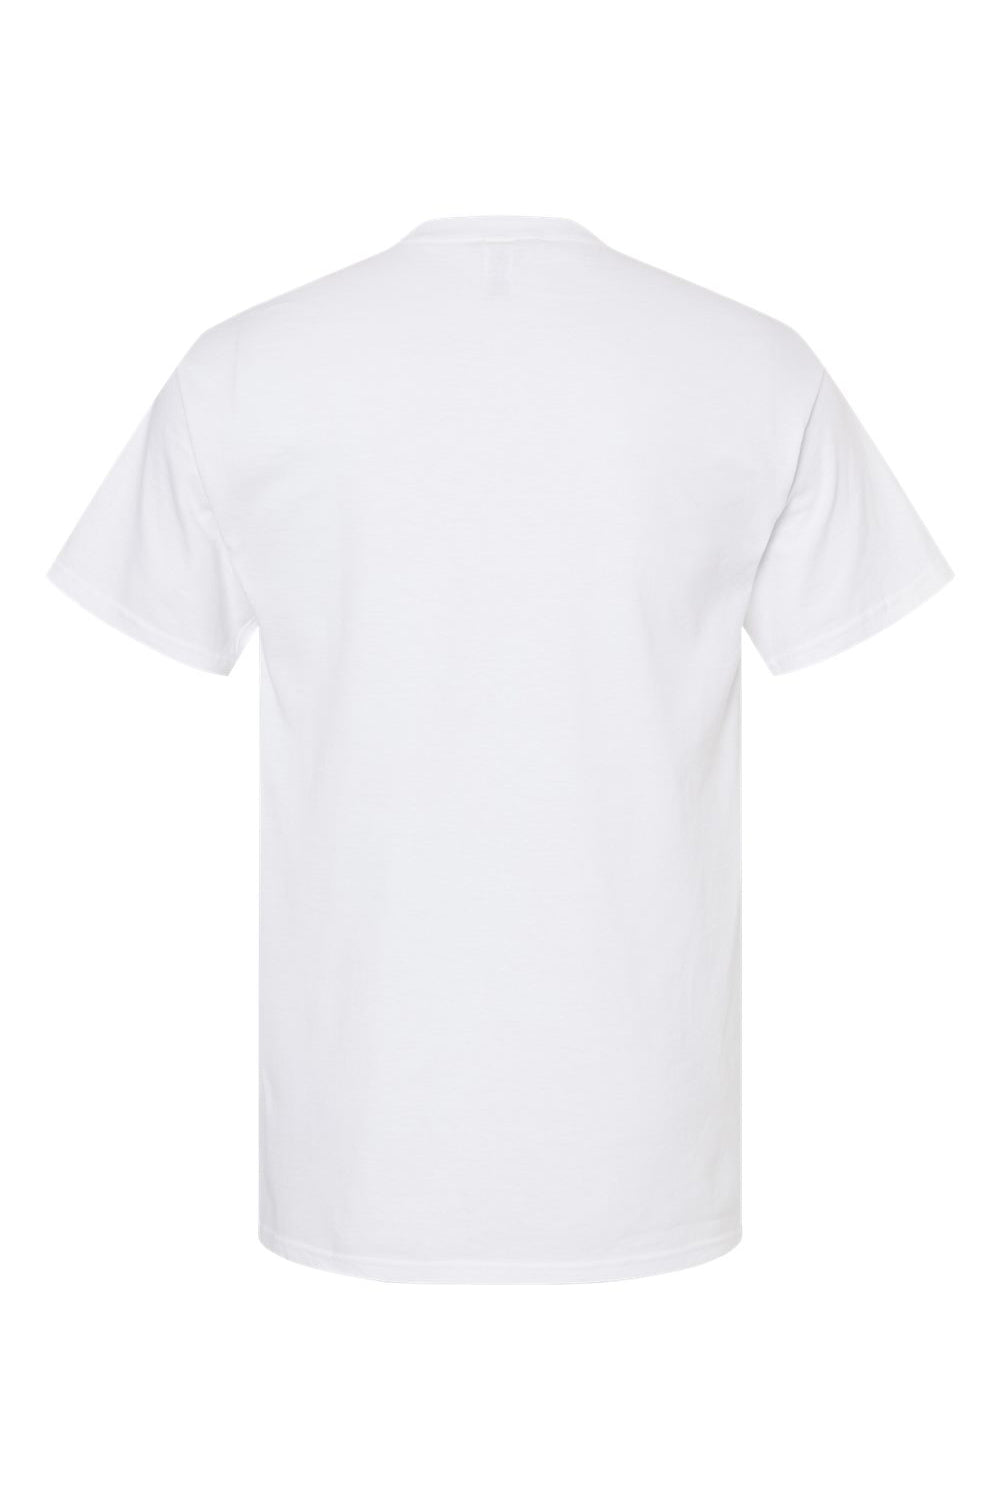 M&O 4800 Mens Gold Soft Touch Short Sleeve Crewneck T-Shirt White Flat Back